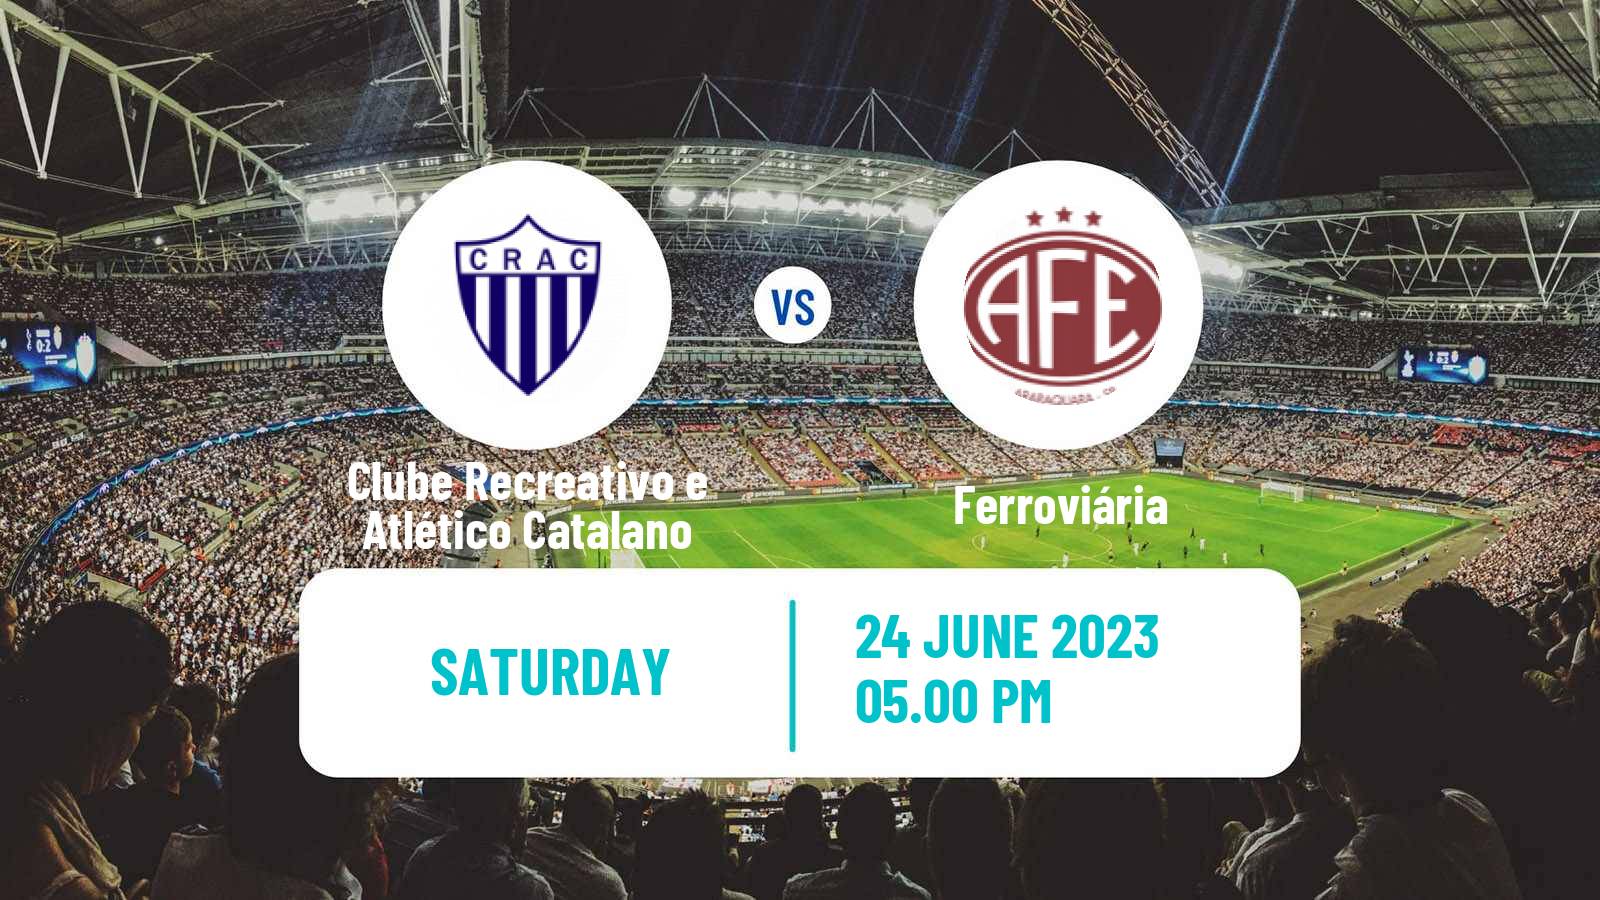 Soccer Brazilian Serie D Clube Recreativo e Atlético Catalano - Ferroviária